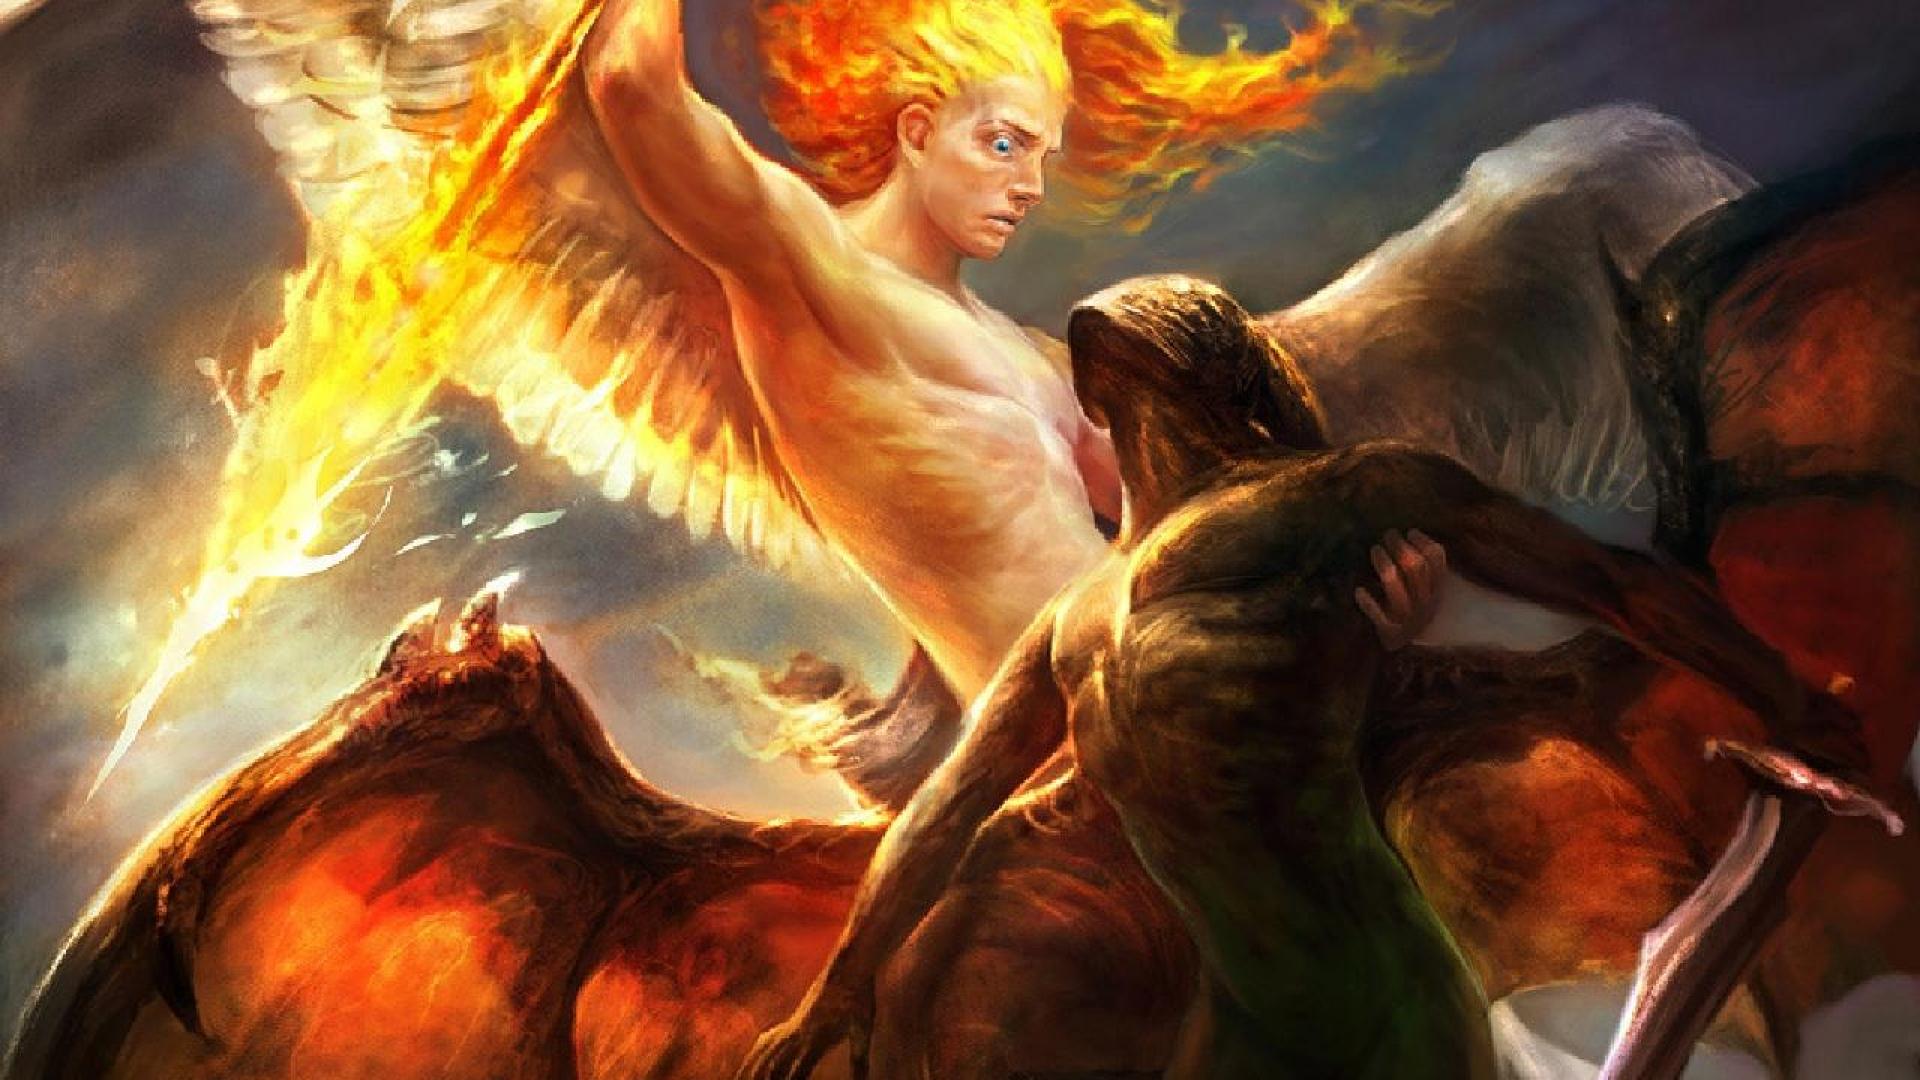 Angel vs demon wallpaper - HQ Desktop Wallpapers